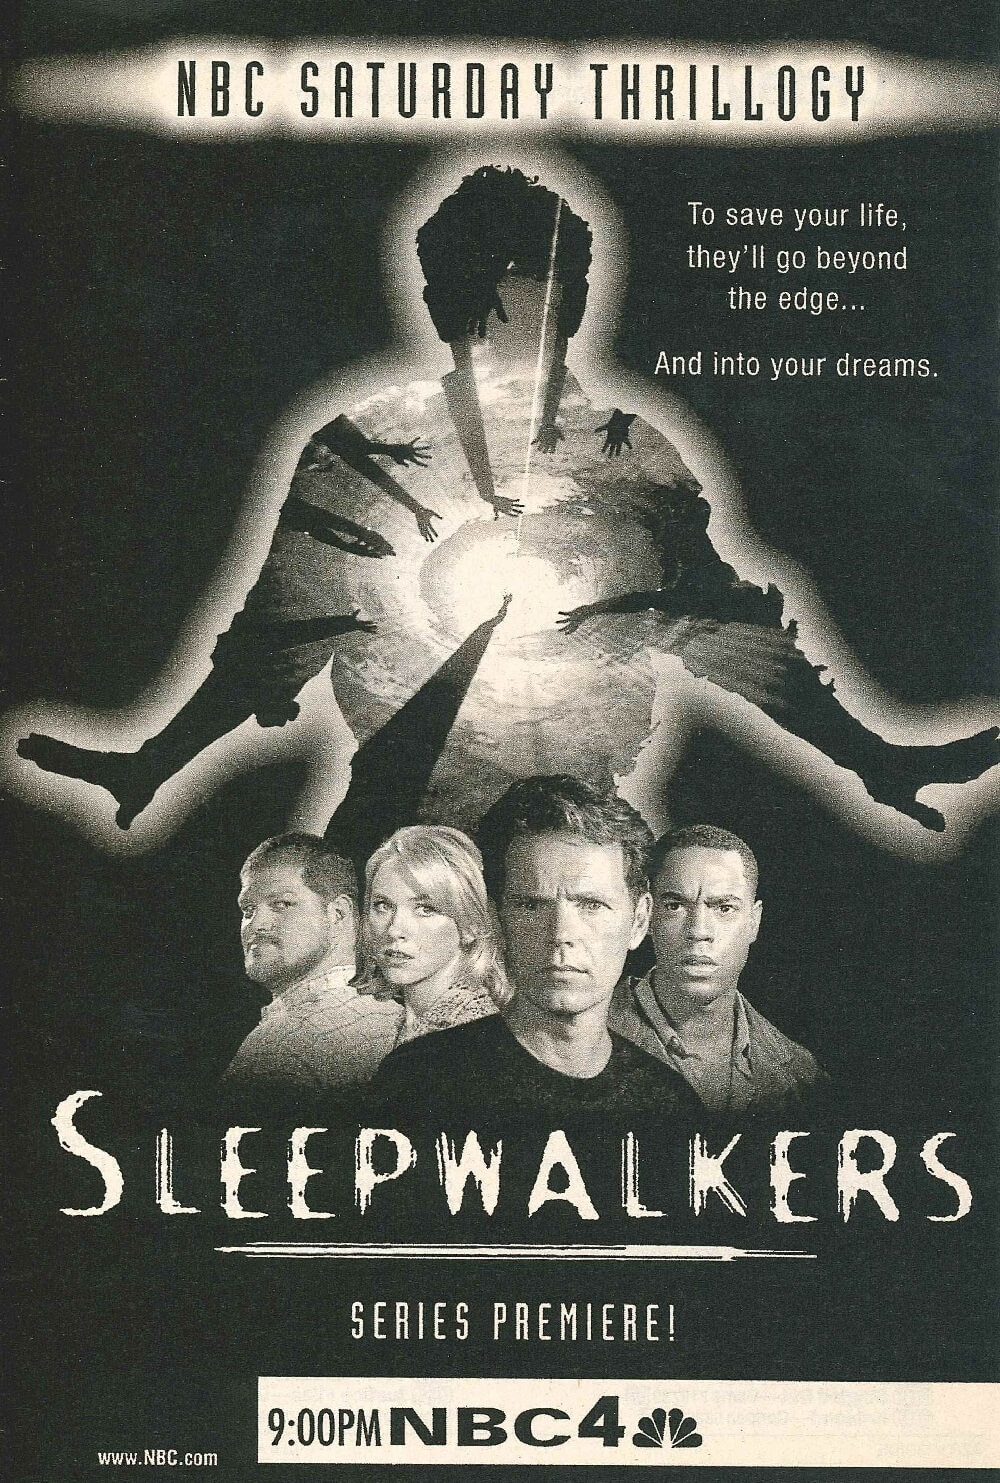 An NBC ad for Sleepwalkers